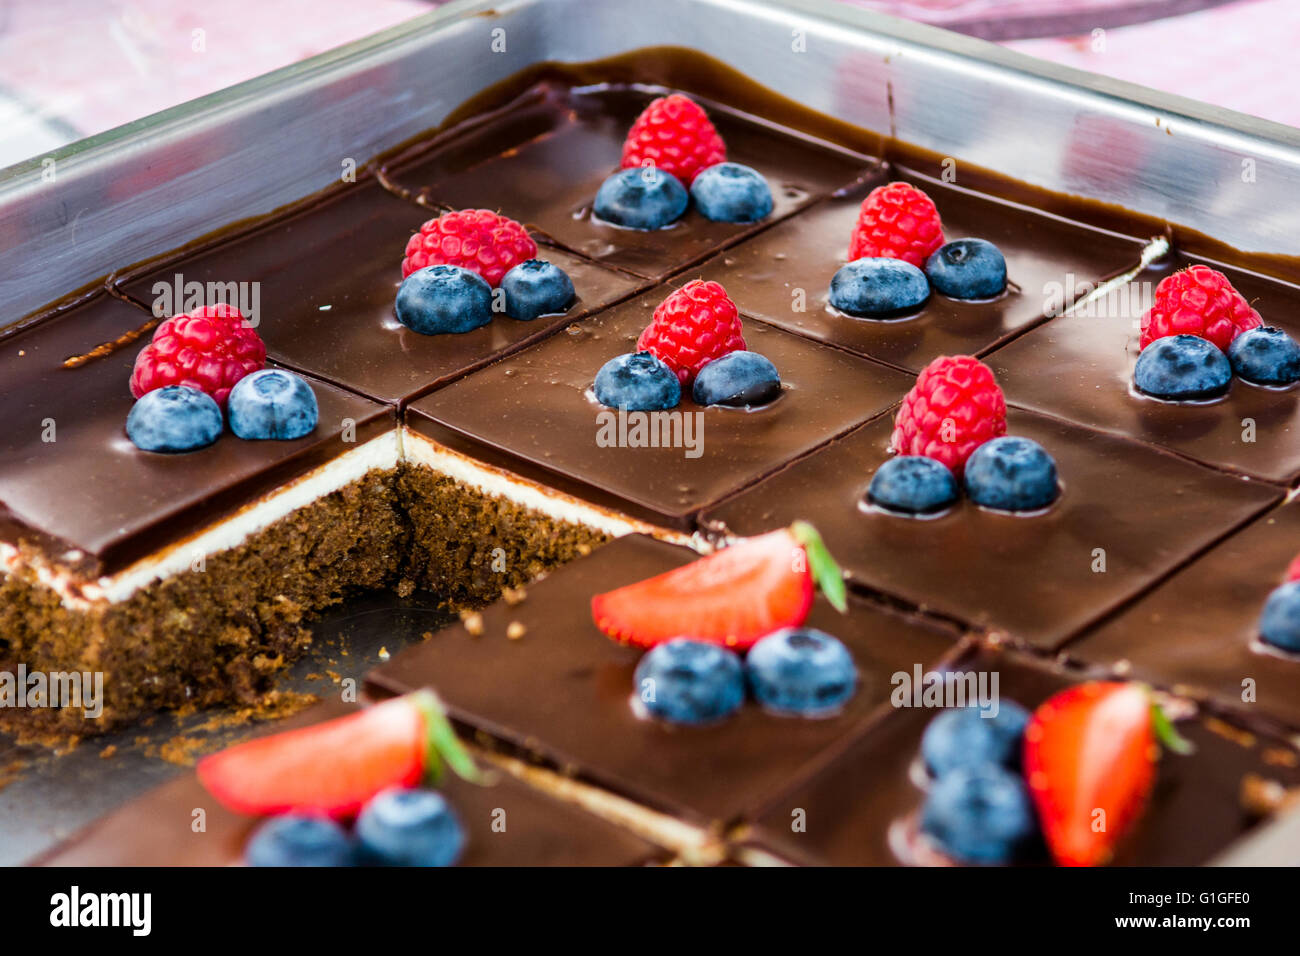 Tasty chocolate pastry with fresh berries. Stock Photo